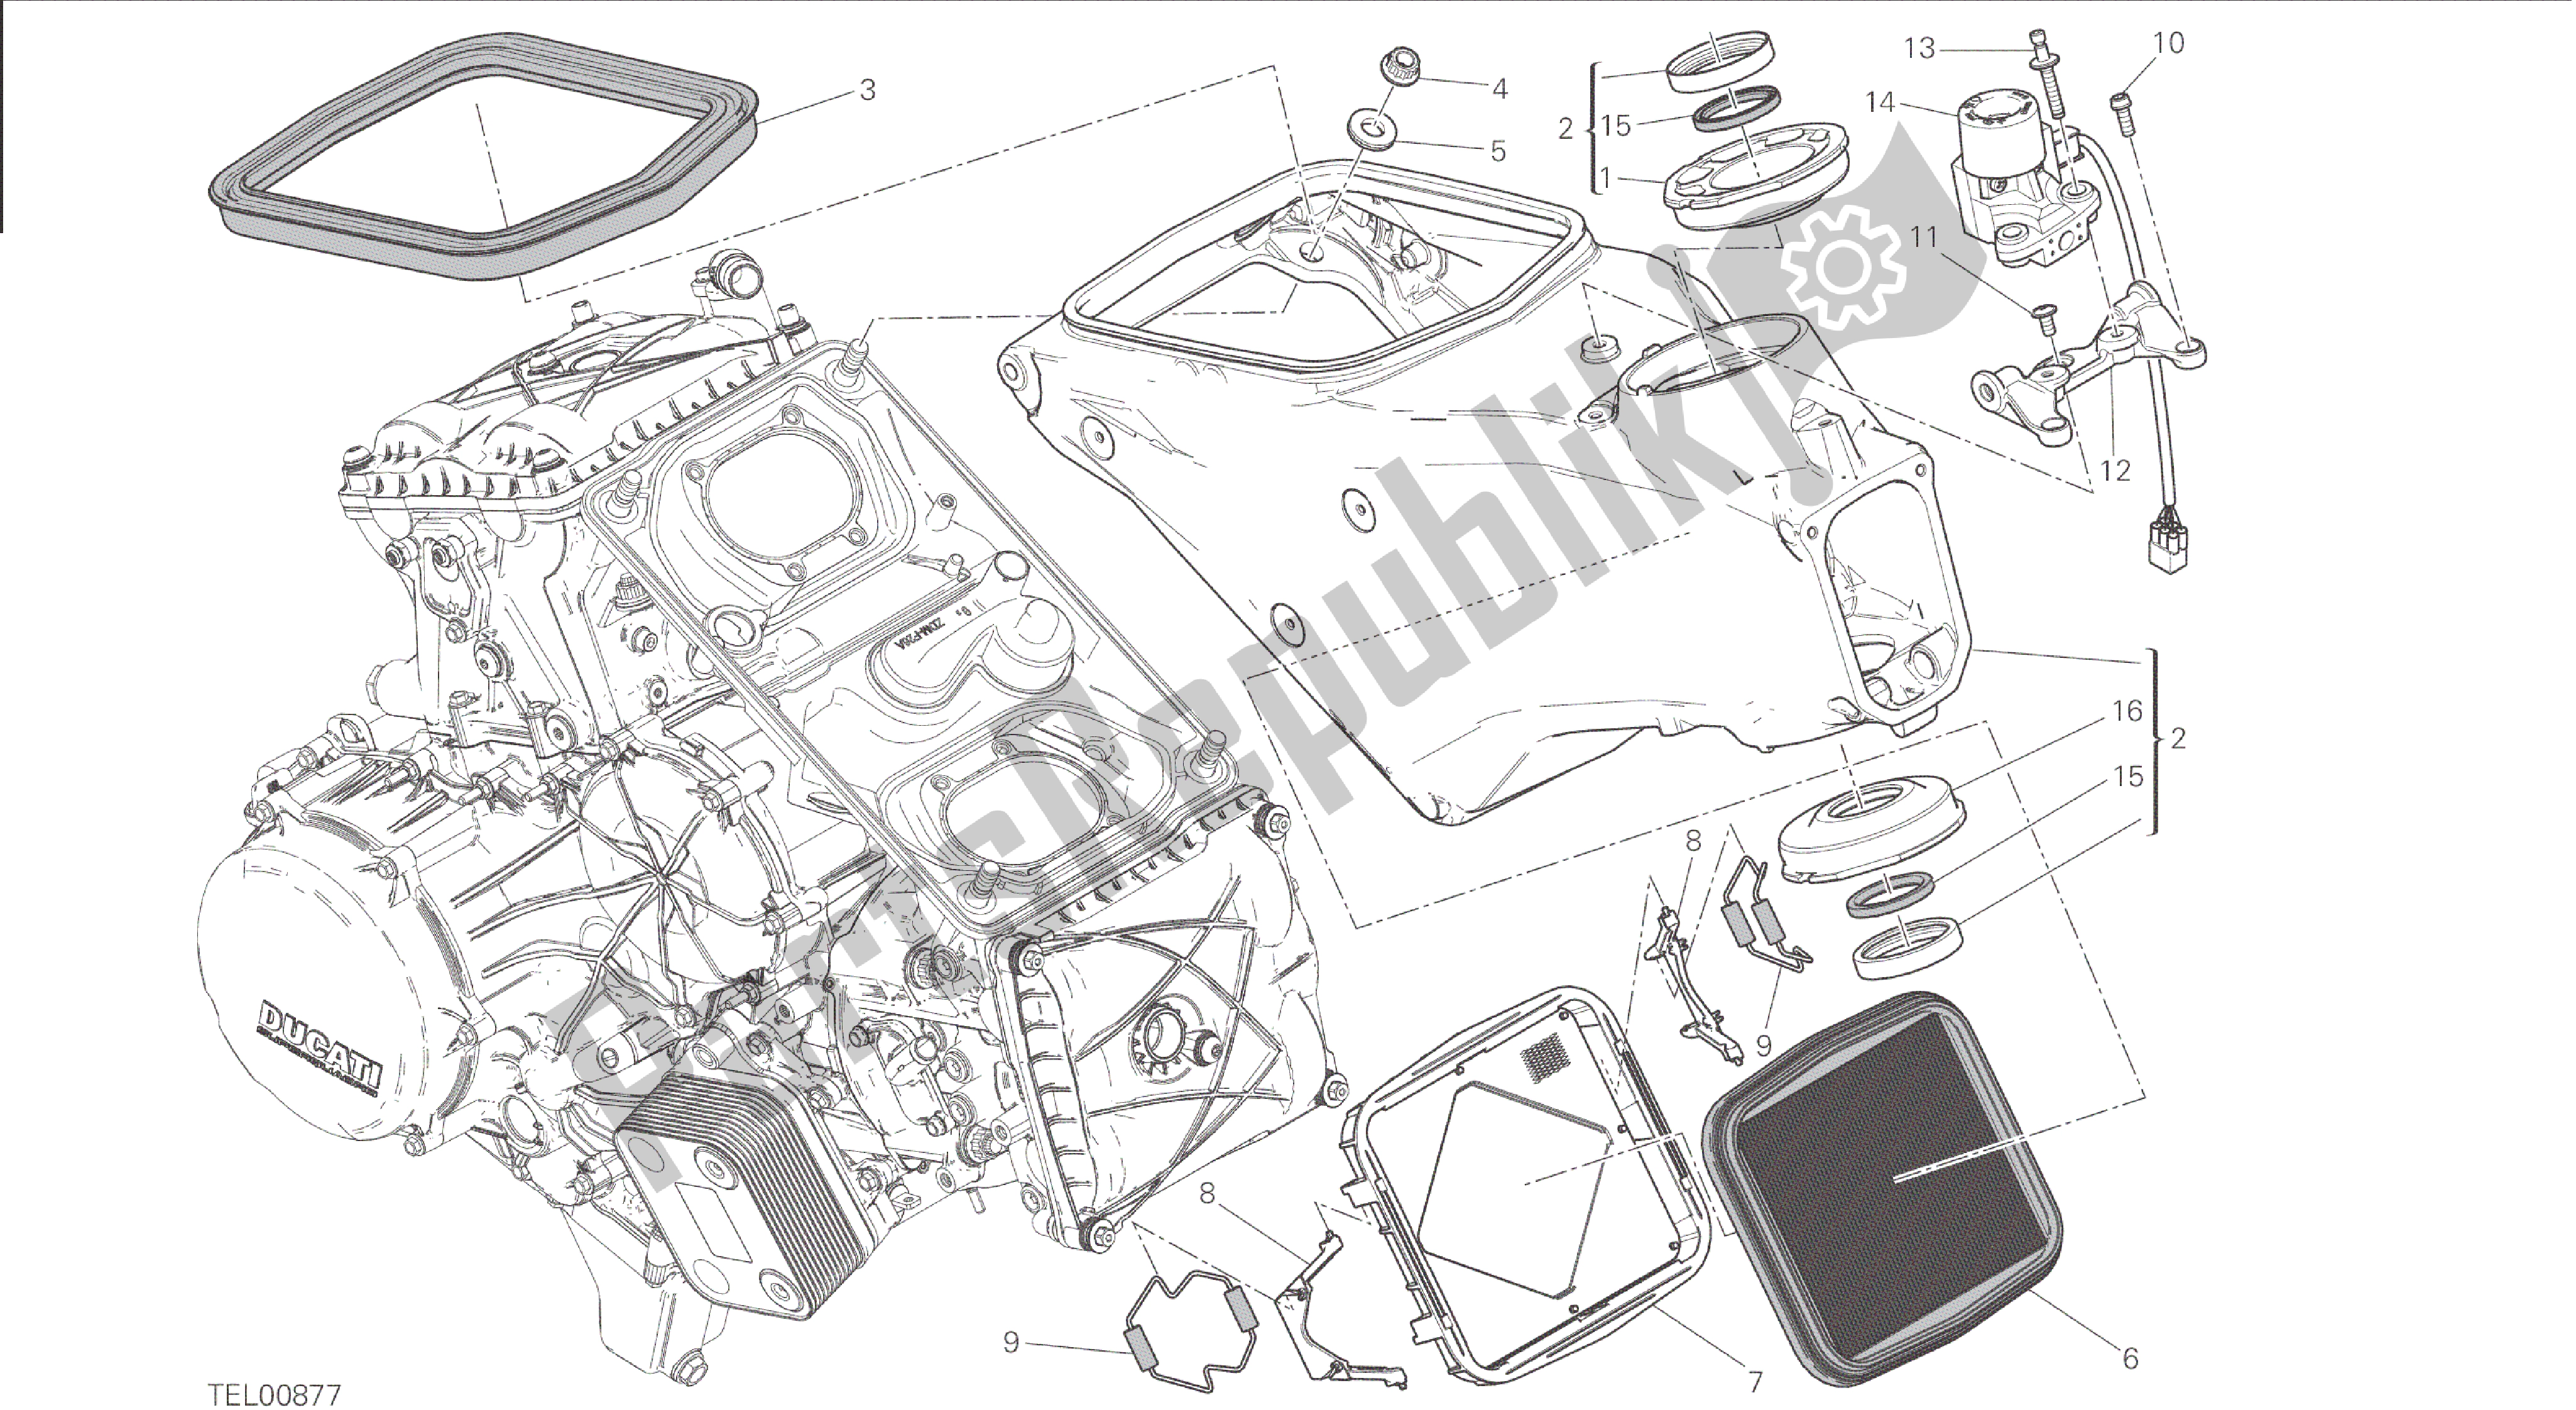 Alle onderdelen voor de Tekening 022 - Frame [mod: 1199 R; Xst: Aus, Eur, Fra, Jap, Twn] Groepsframe van de Ducati Panigale 1198 2015